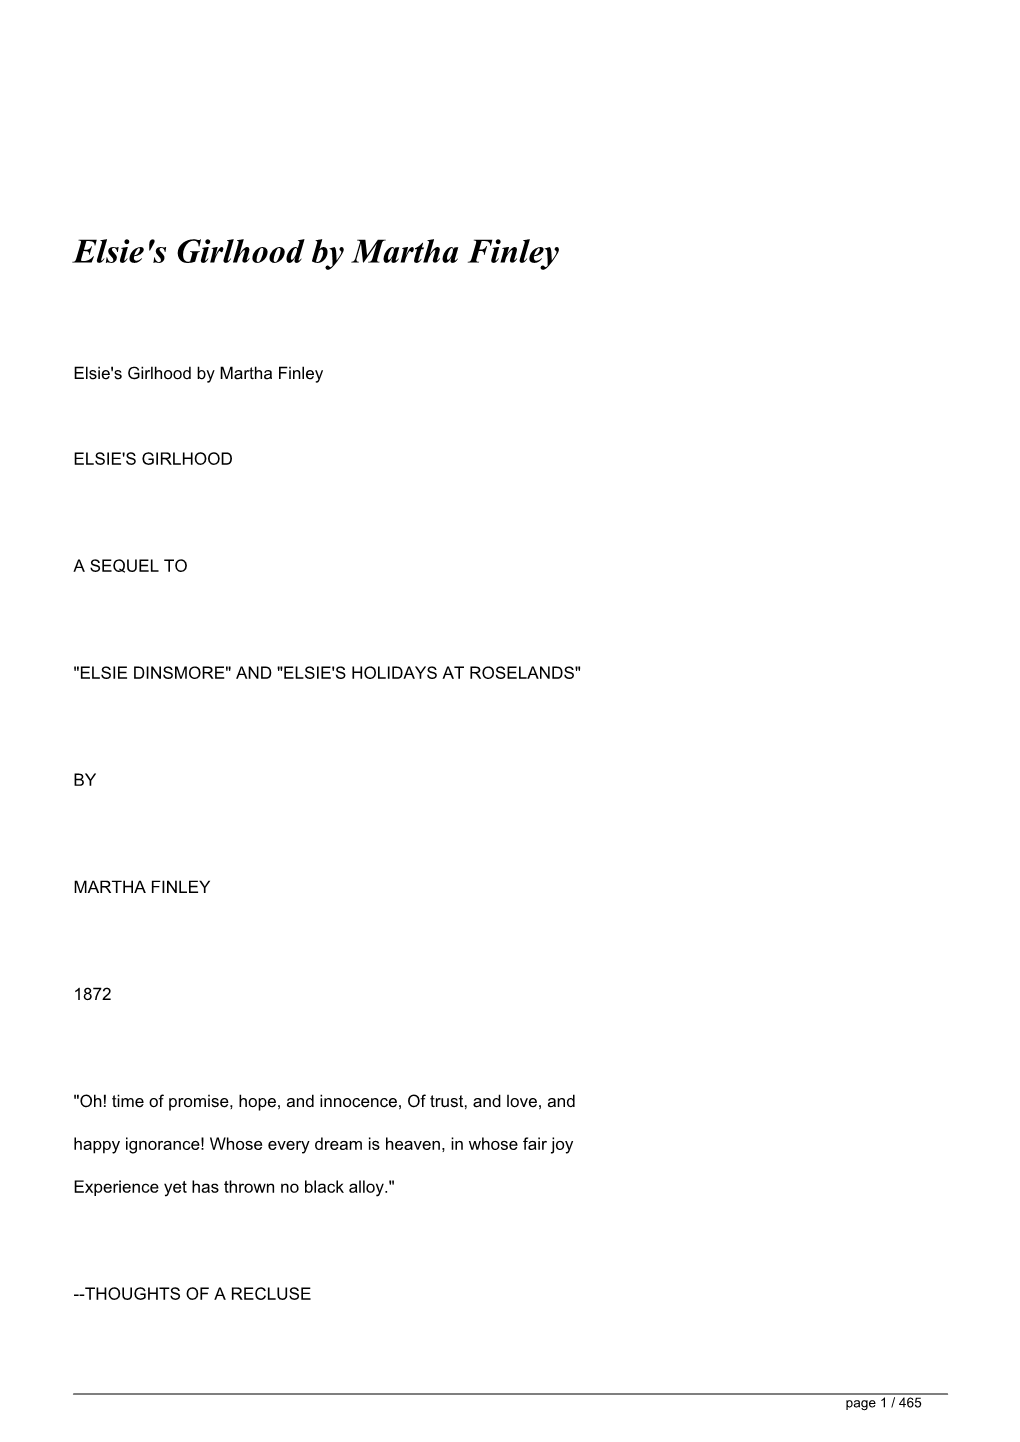 Elsie's Girlhood by Martha Finley&lt;/H1&gt;